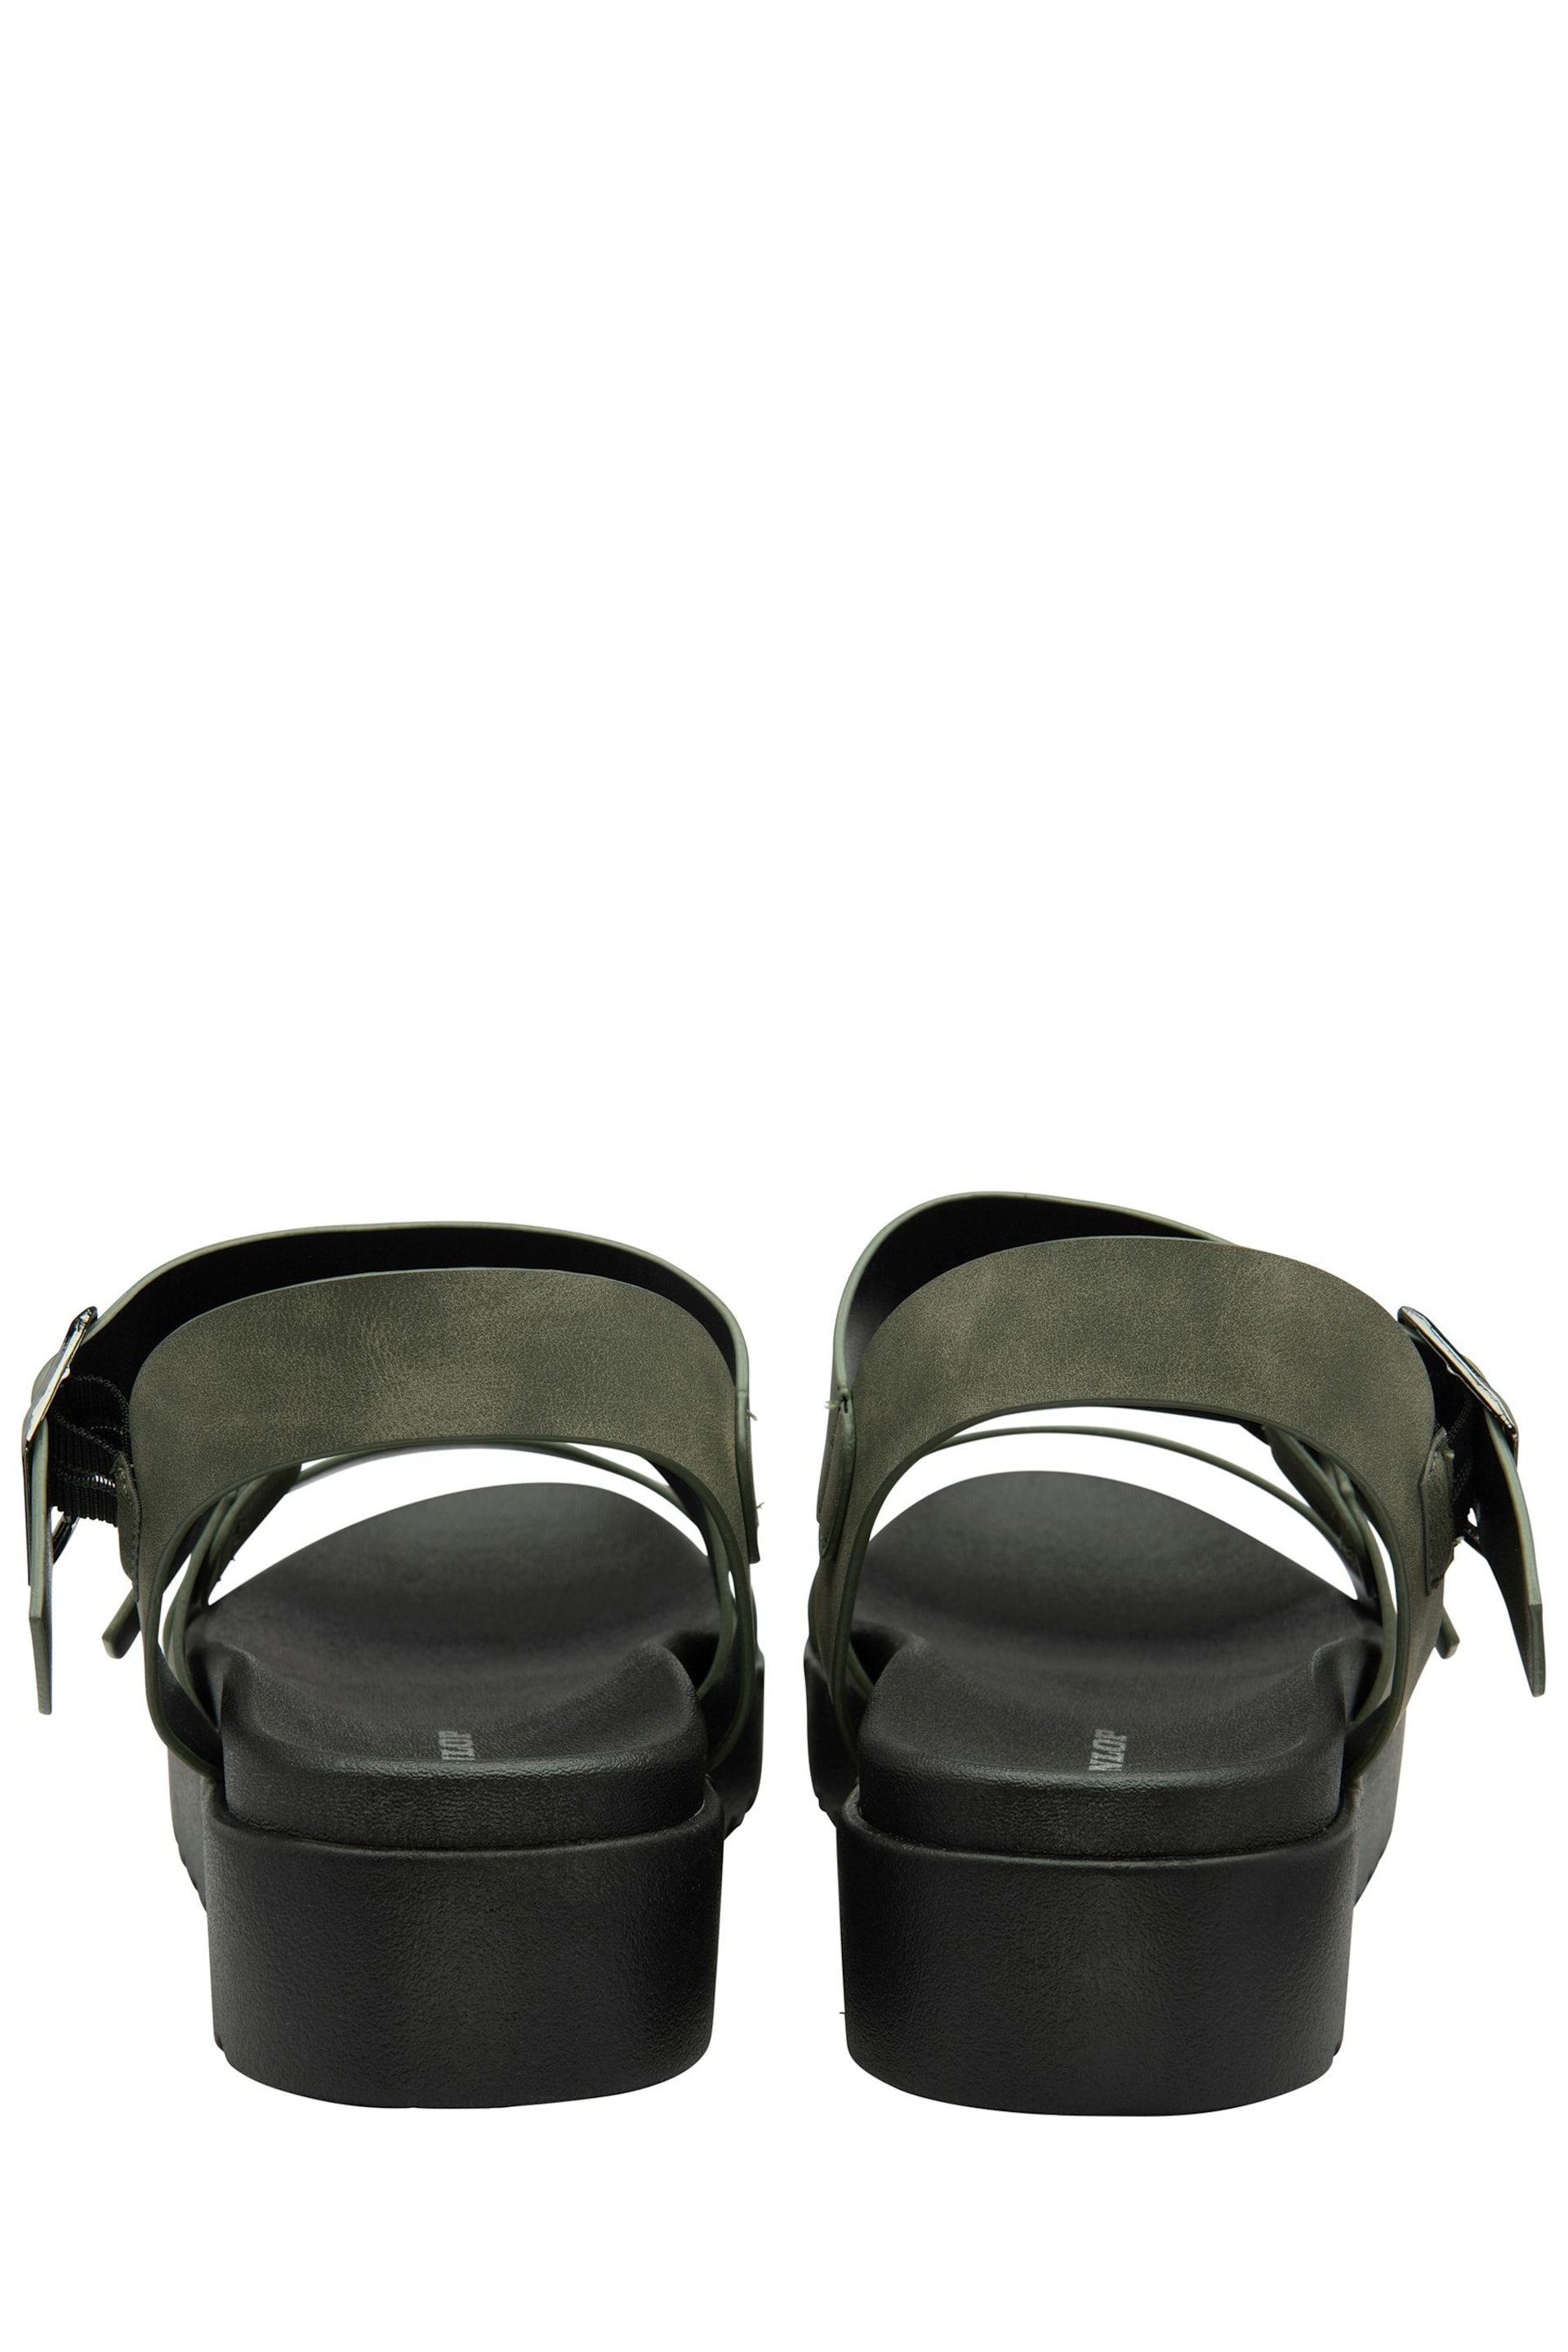 Dunlop Green Ladies Flatform Sandals - Image 2 of 4